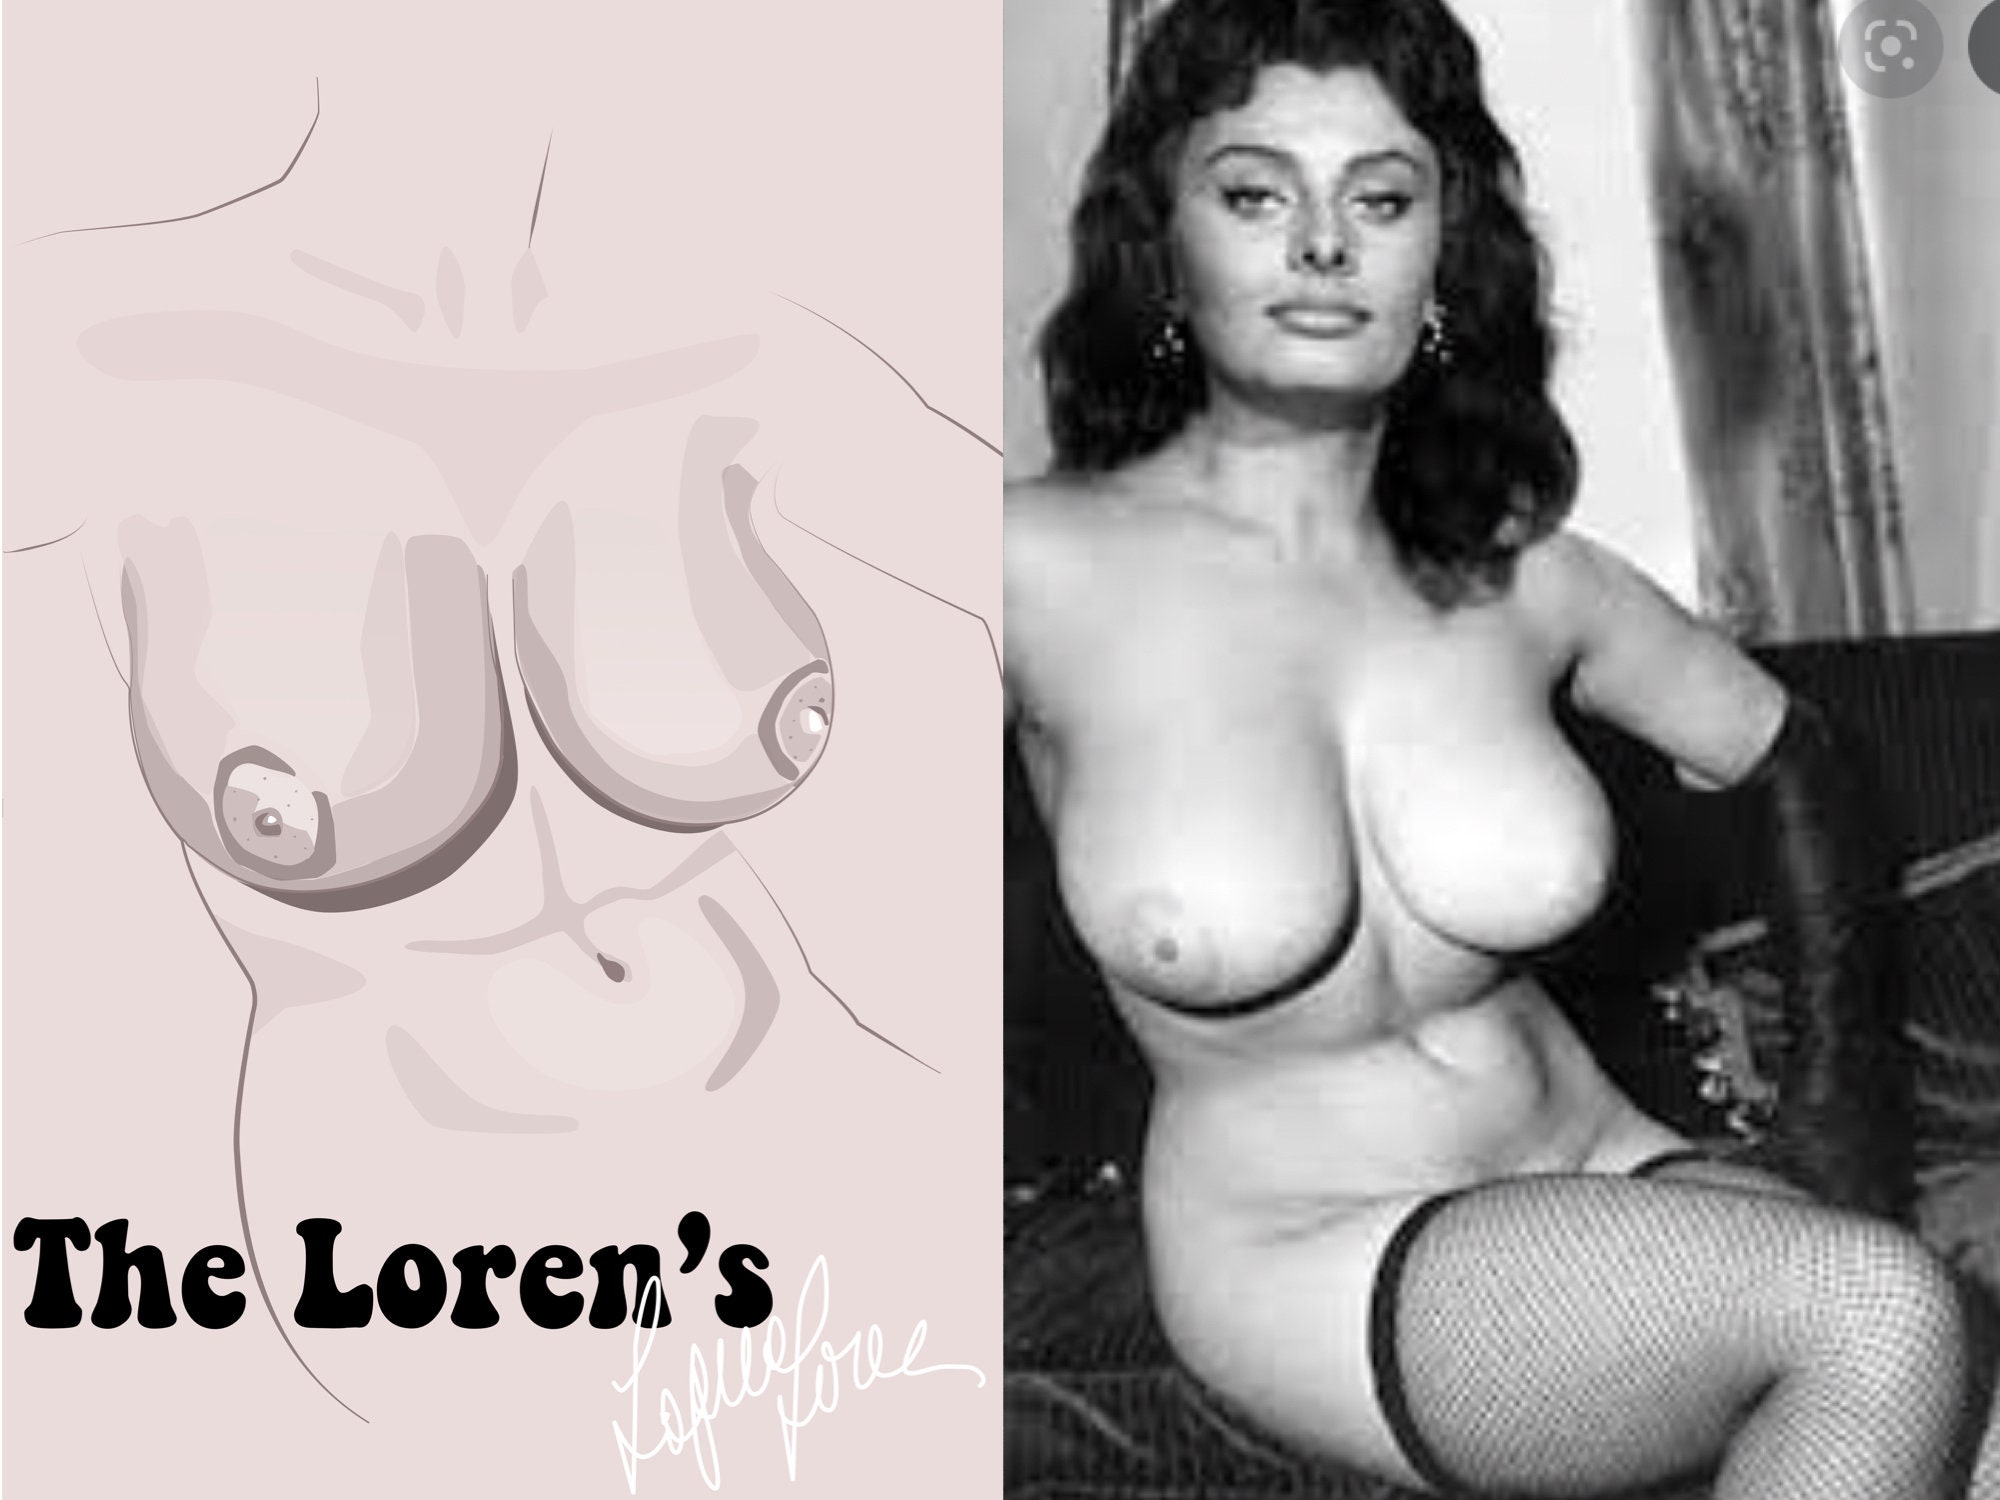 aditya hutapea recommends Sophia Loren Naked